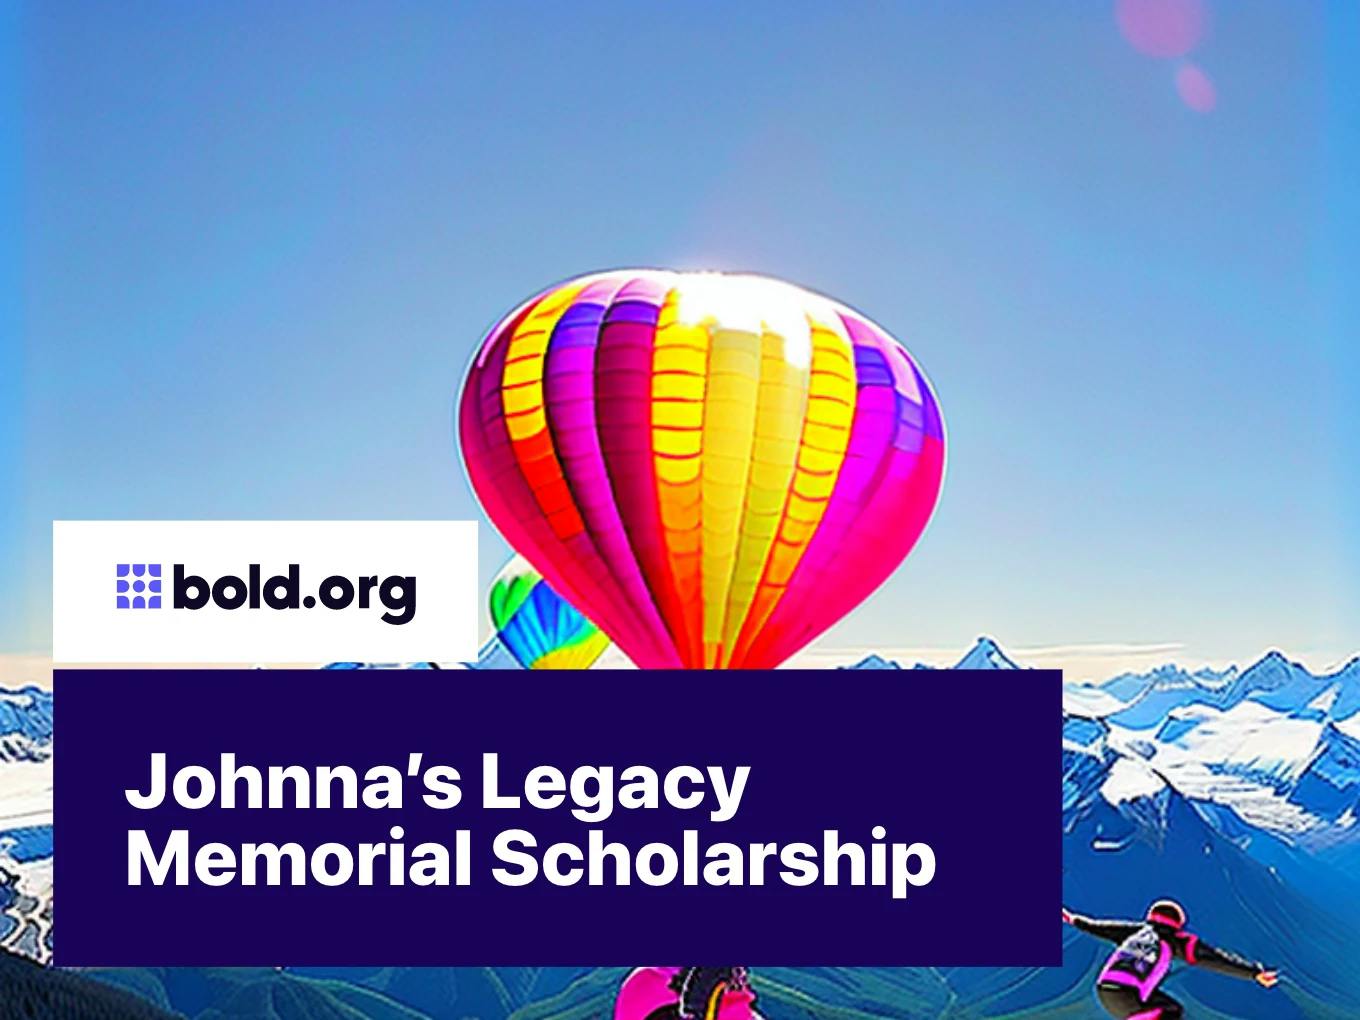 Johnna's Legacy Memorial Scholarship